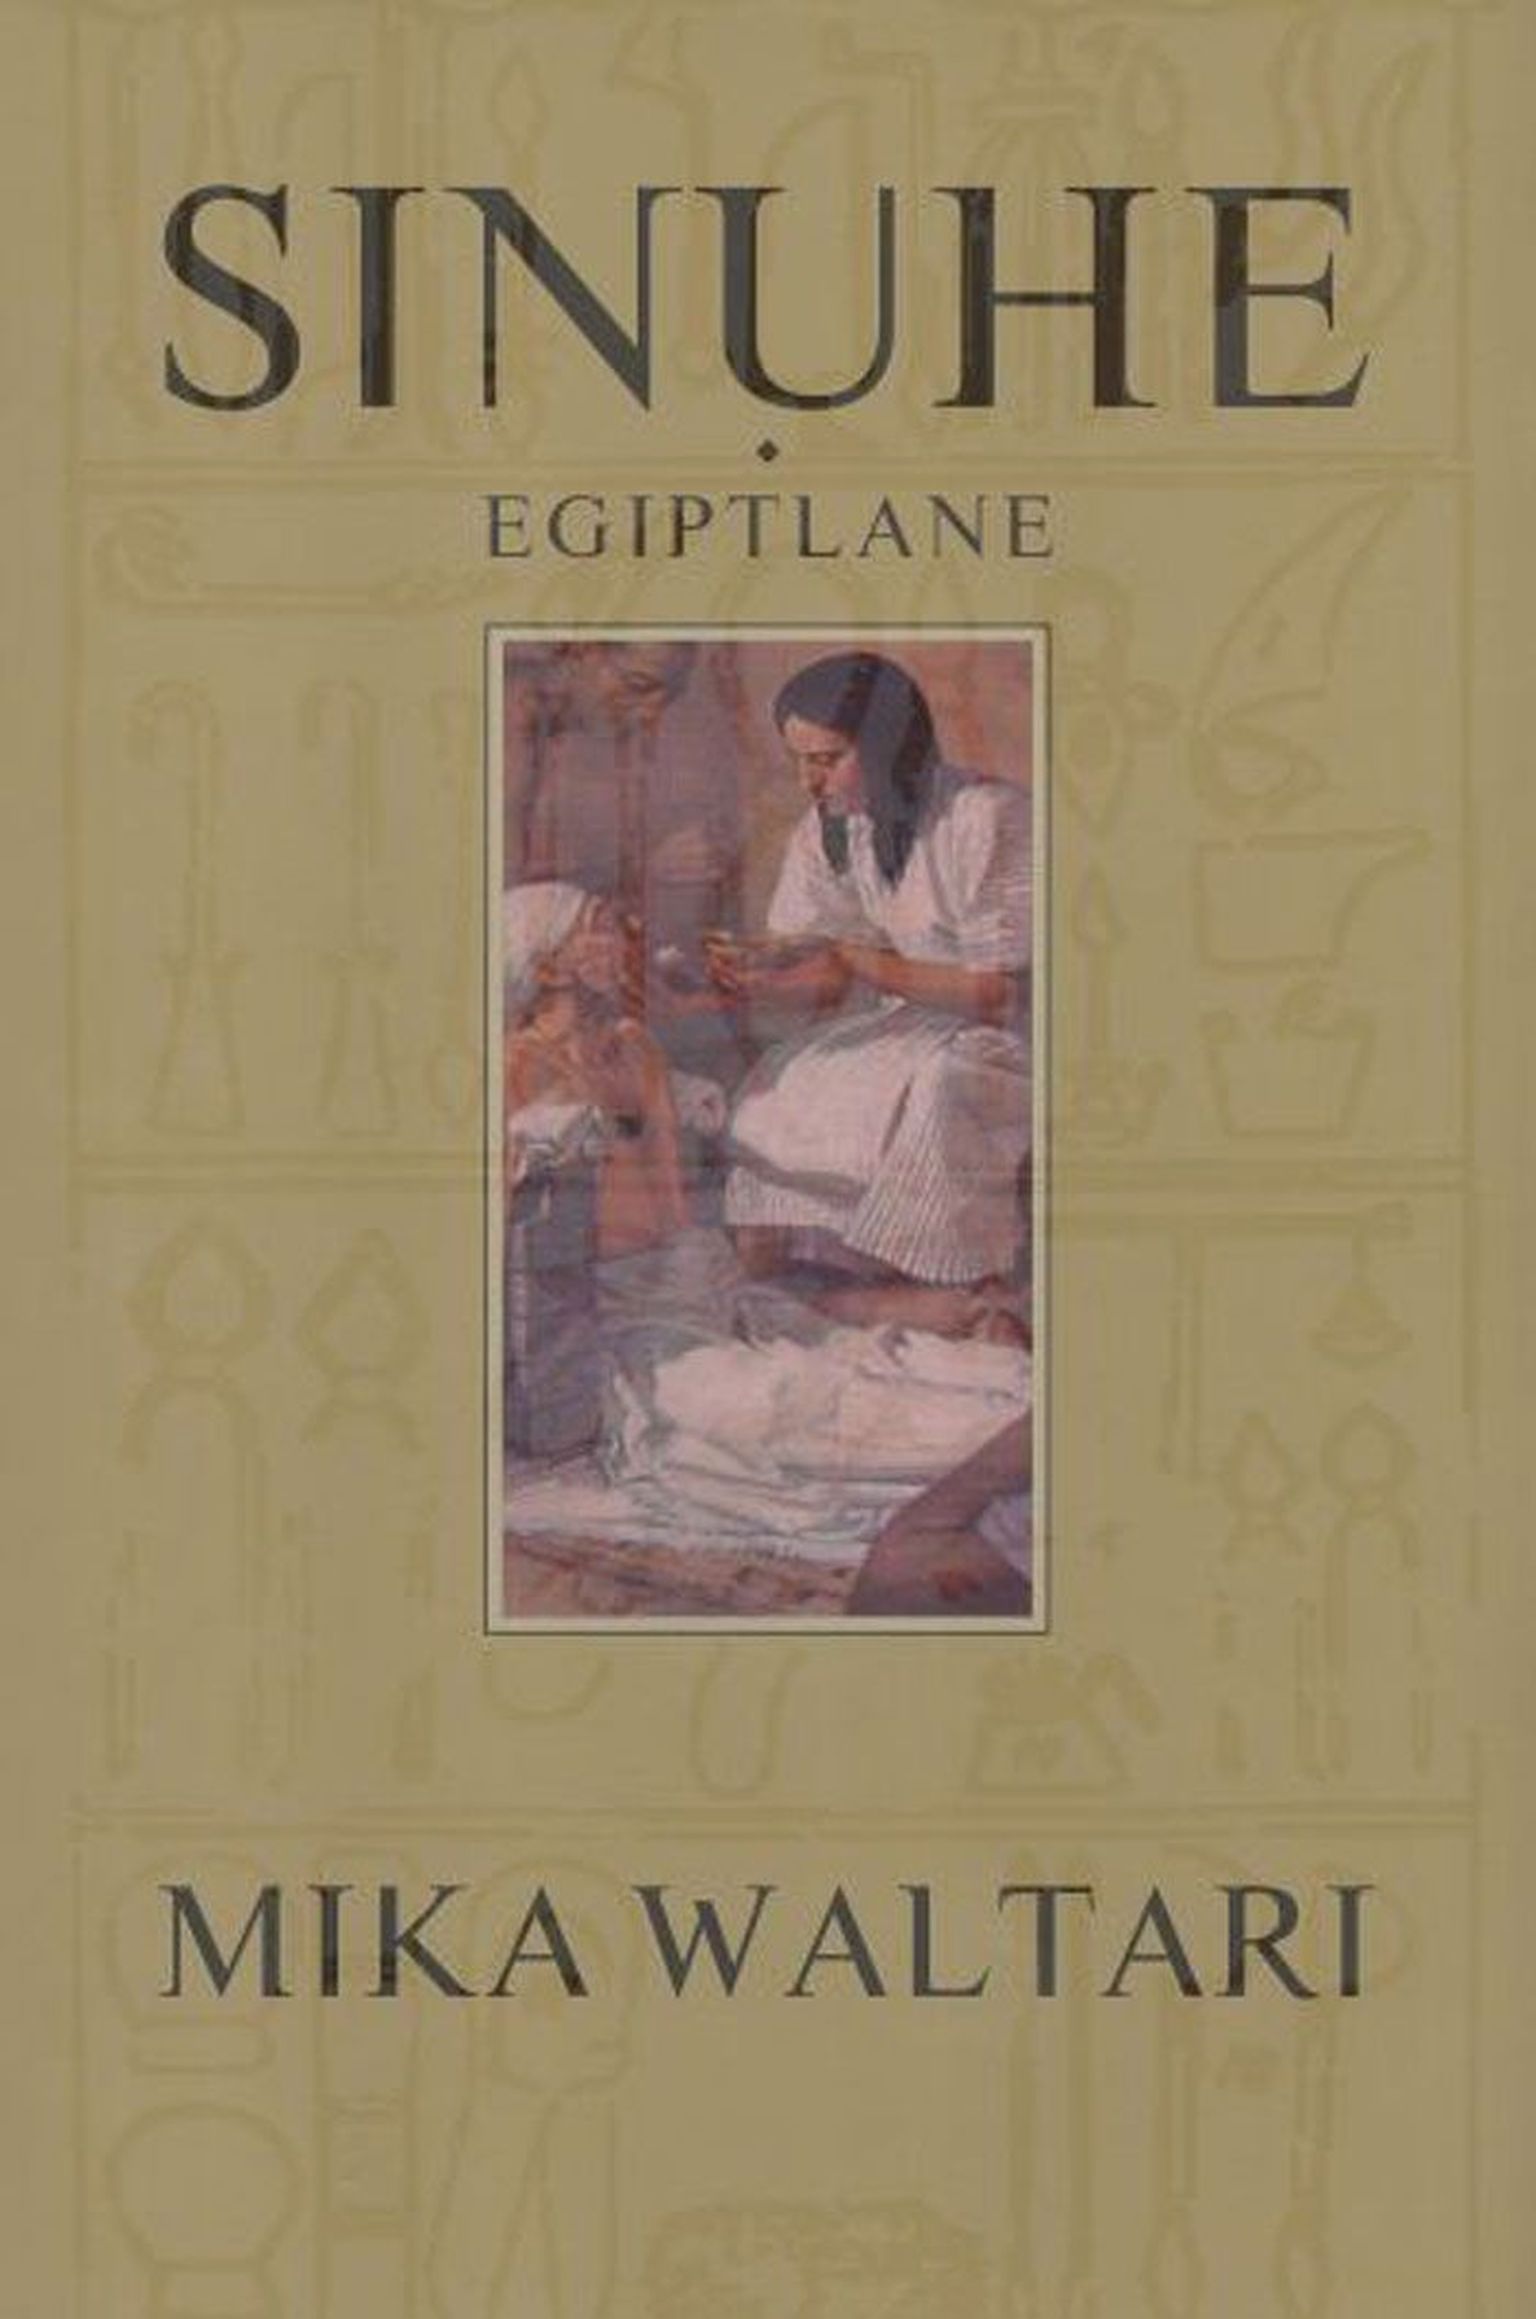 Raamat

Mika Waltari «Sinuhe»
Tõlge Piret Saluri 
Kirjastus Varrak, 2009